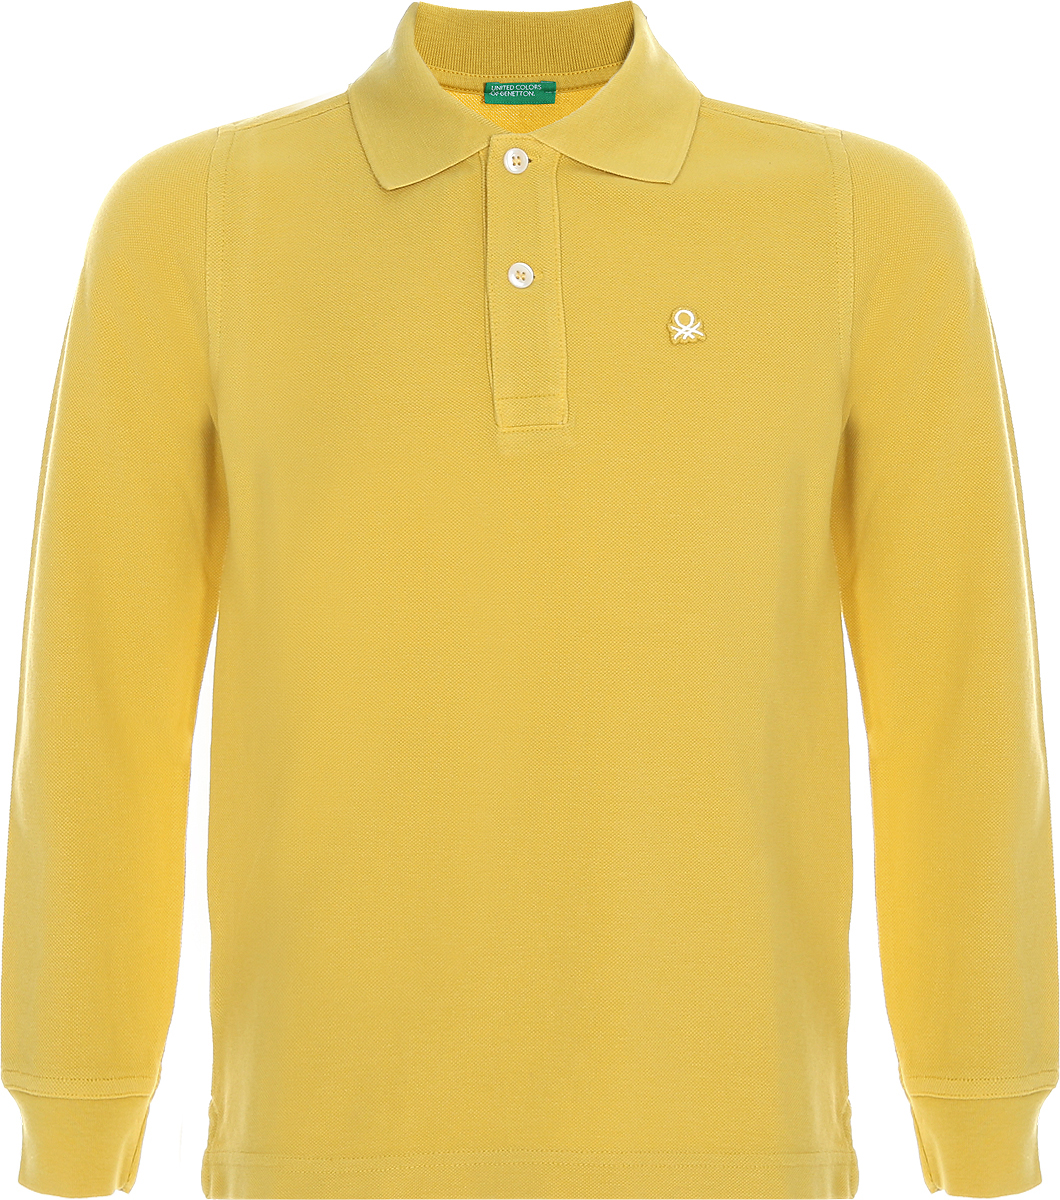 Кофта для мальчика United Colors of Benetton, цвет: желтый. 3089C3090_36H. Размер 160